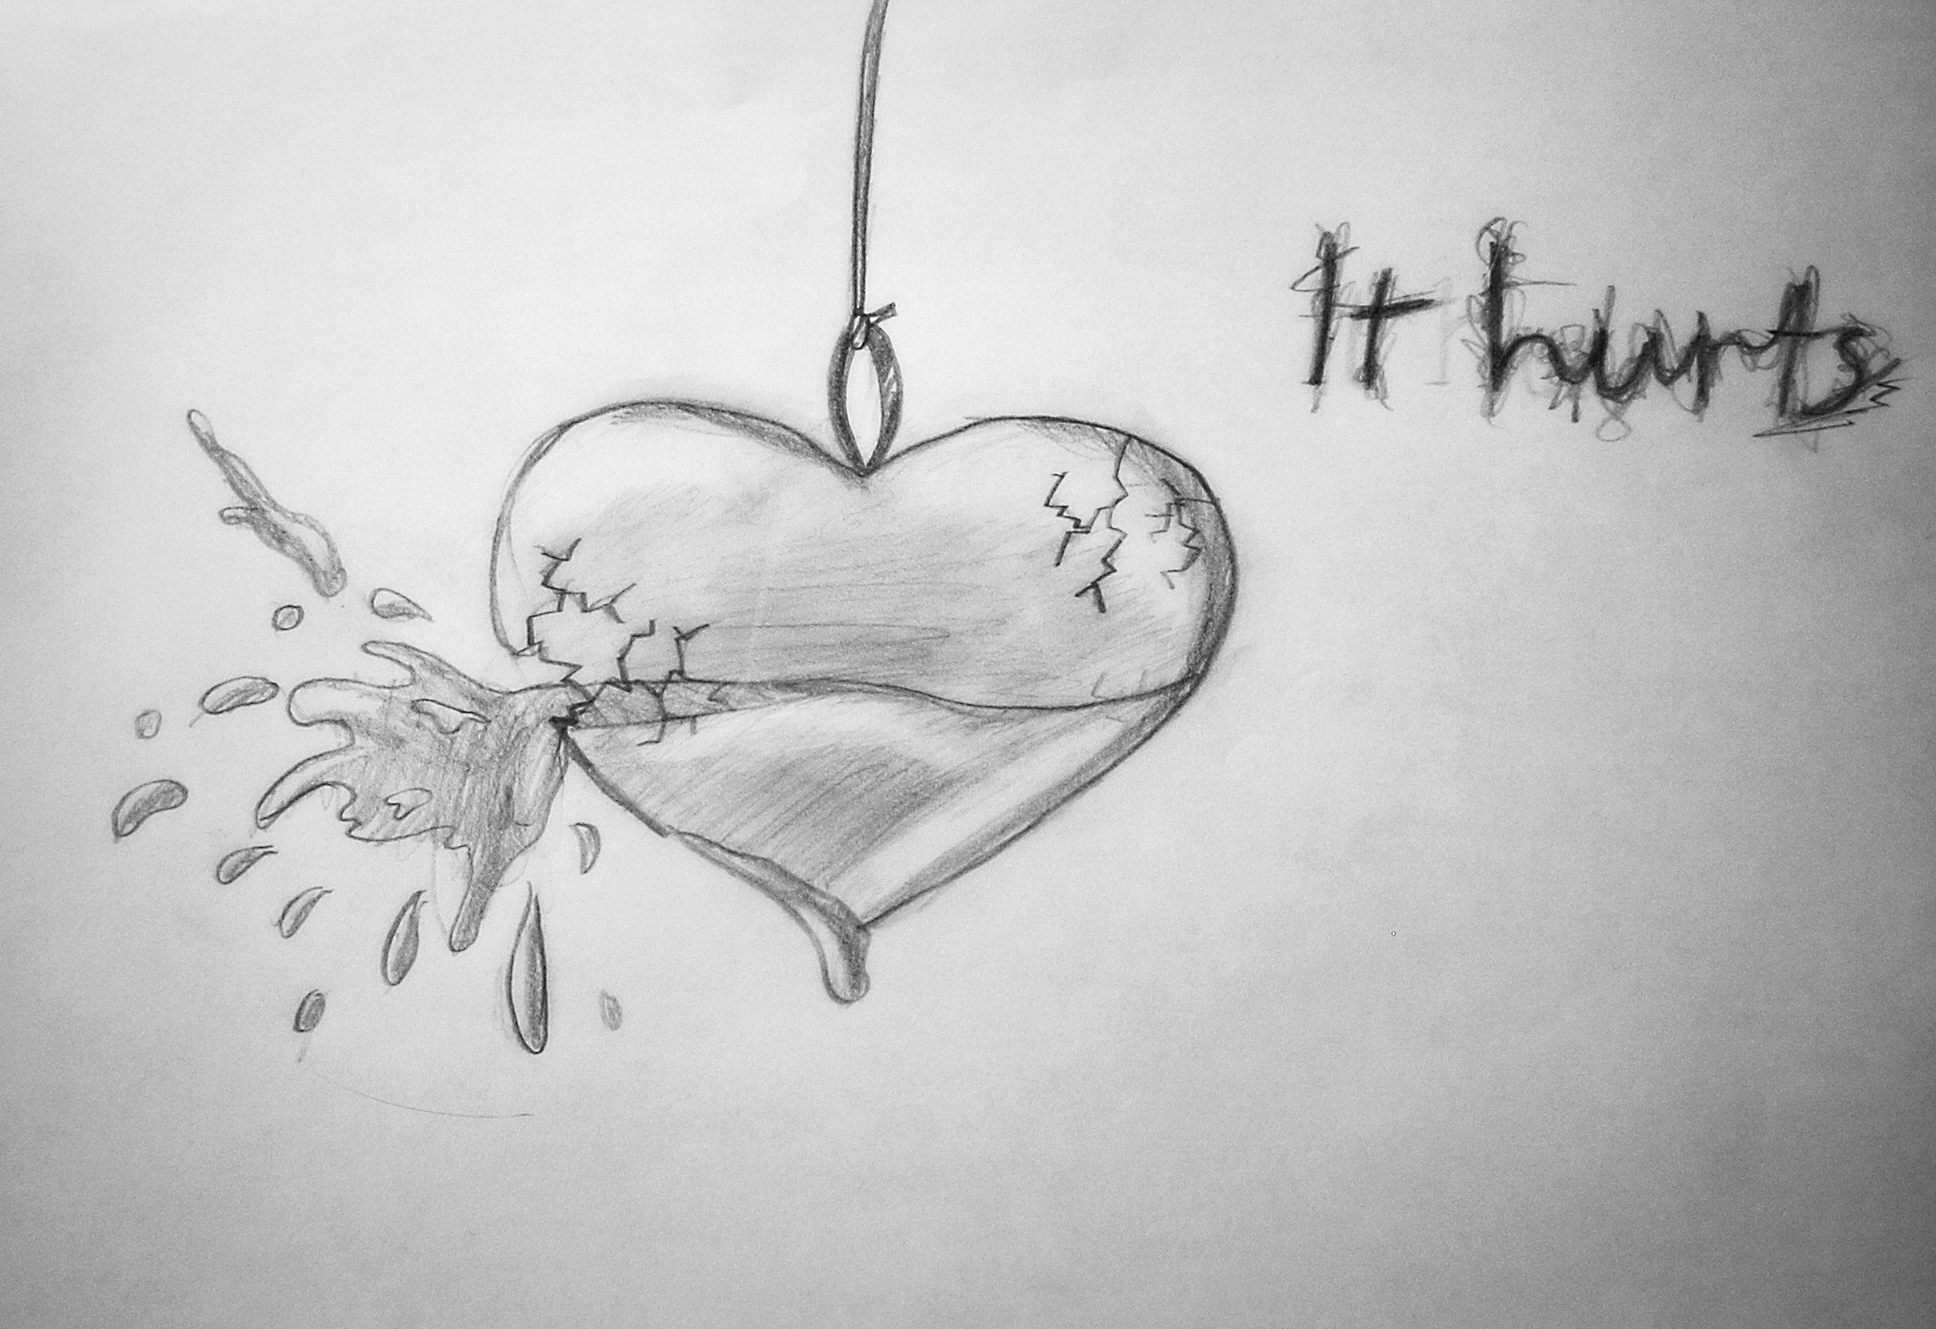 Broken Heart Sketch at Explore collection of